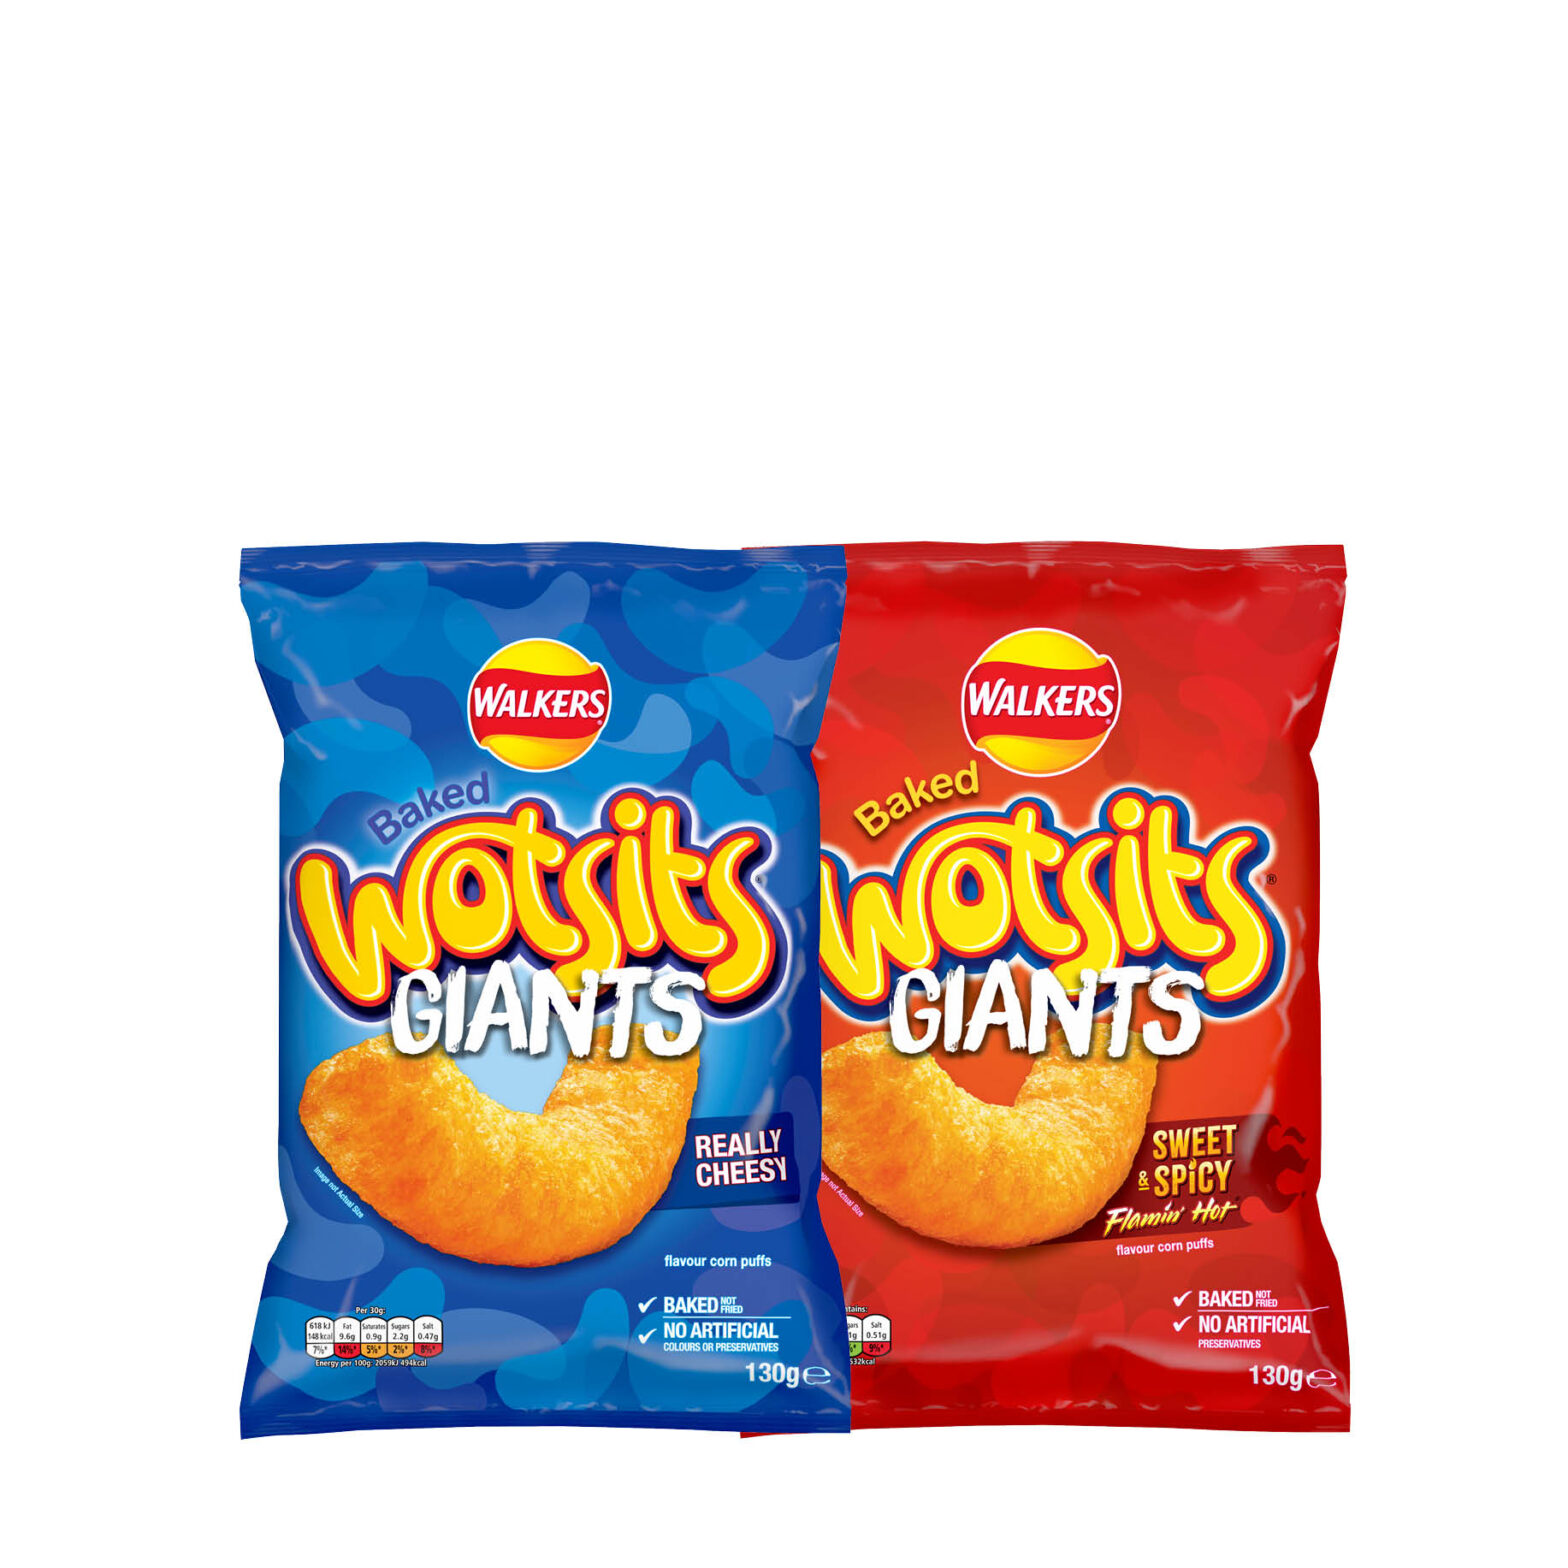 Wotsits Giants Flamin’ Hot / Wotsits Giants Really Cheesy